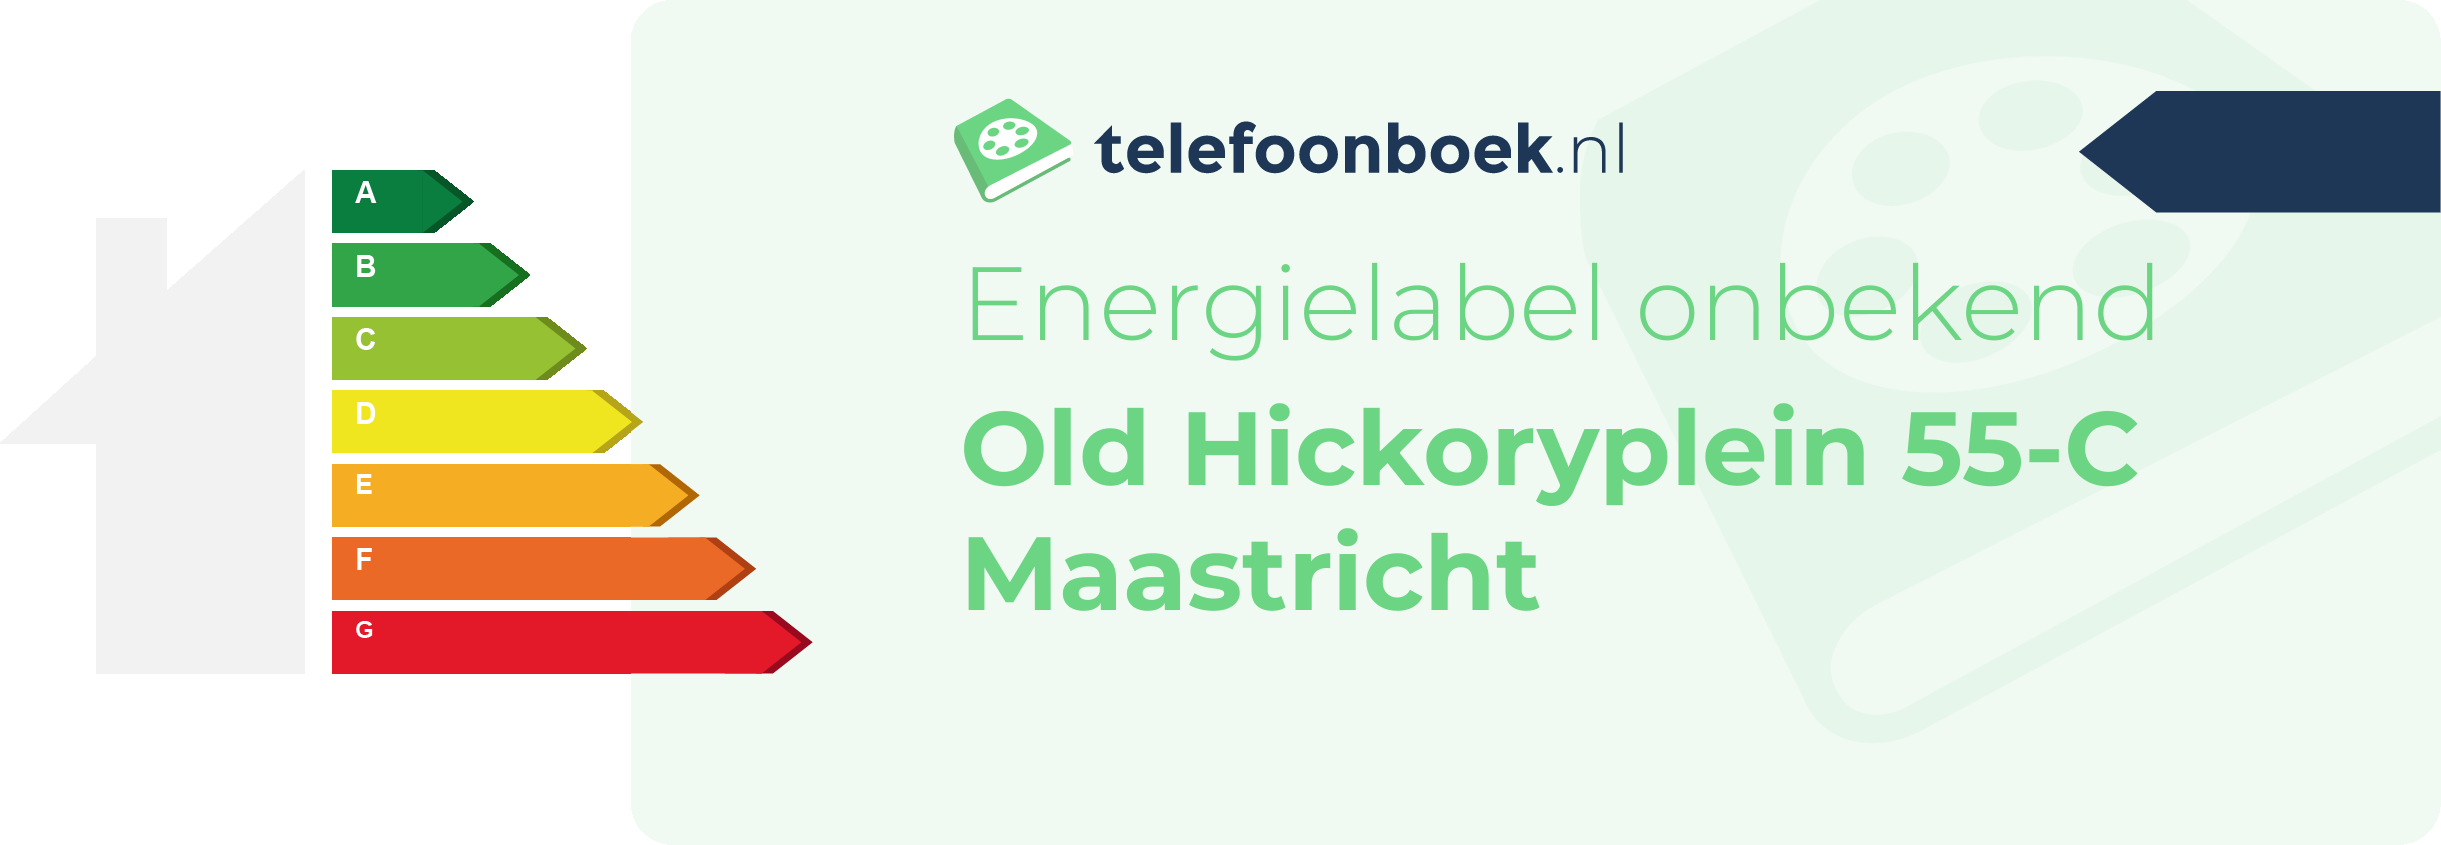 Energielabel Old Hickoryplein 55-C Maastricht